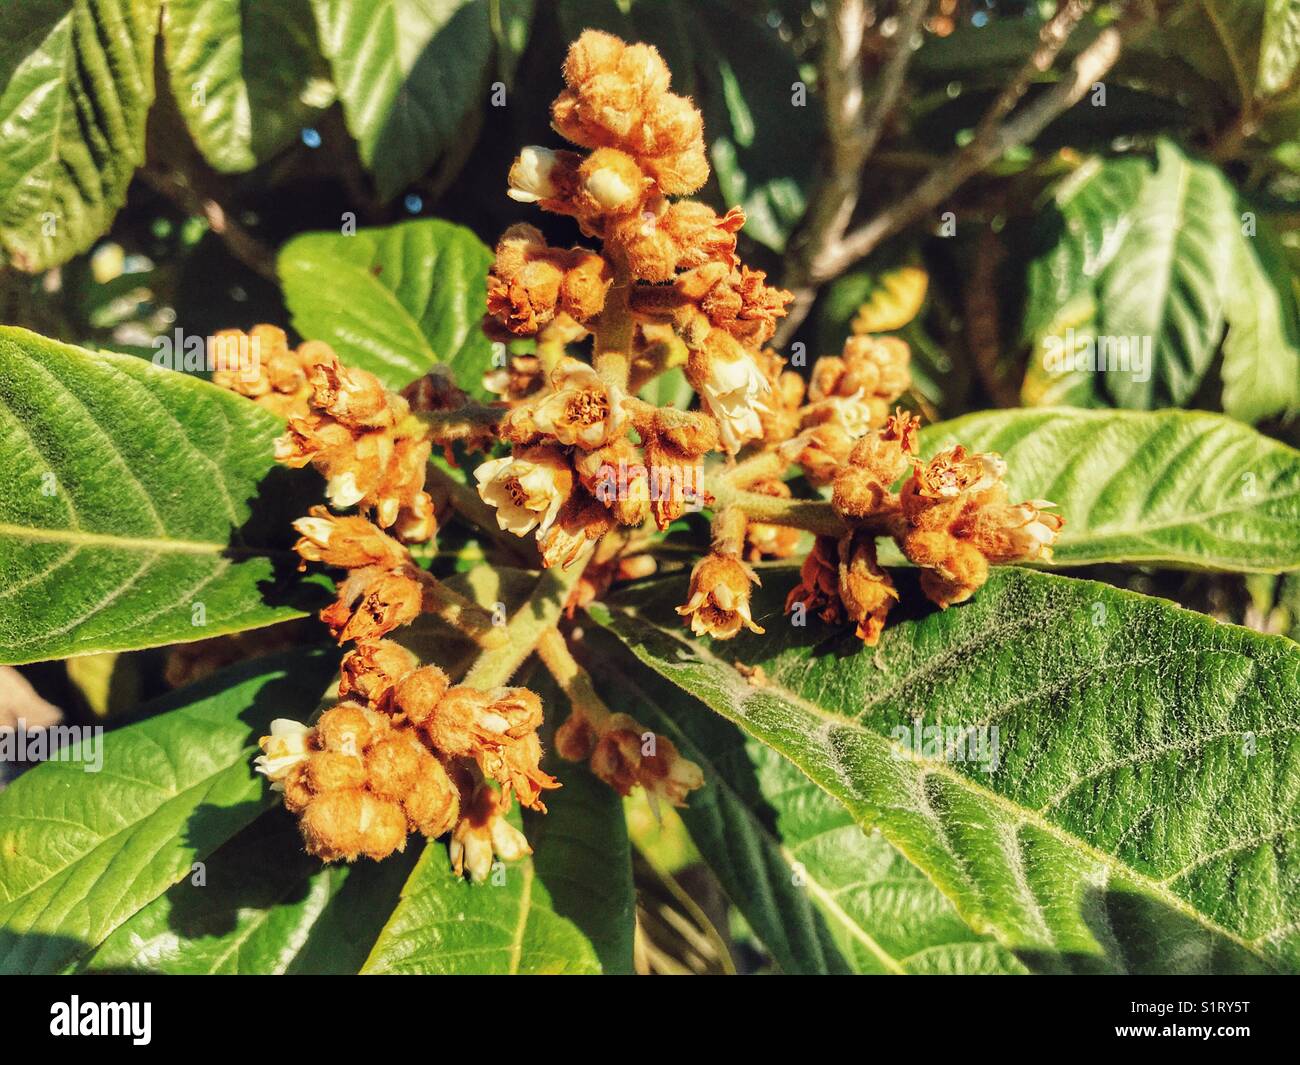 Nispero tree in flower, also known as medlar. The fruit is eaten fresh or used to make jam Stock Photo